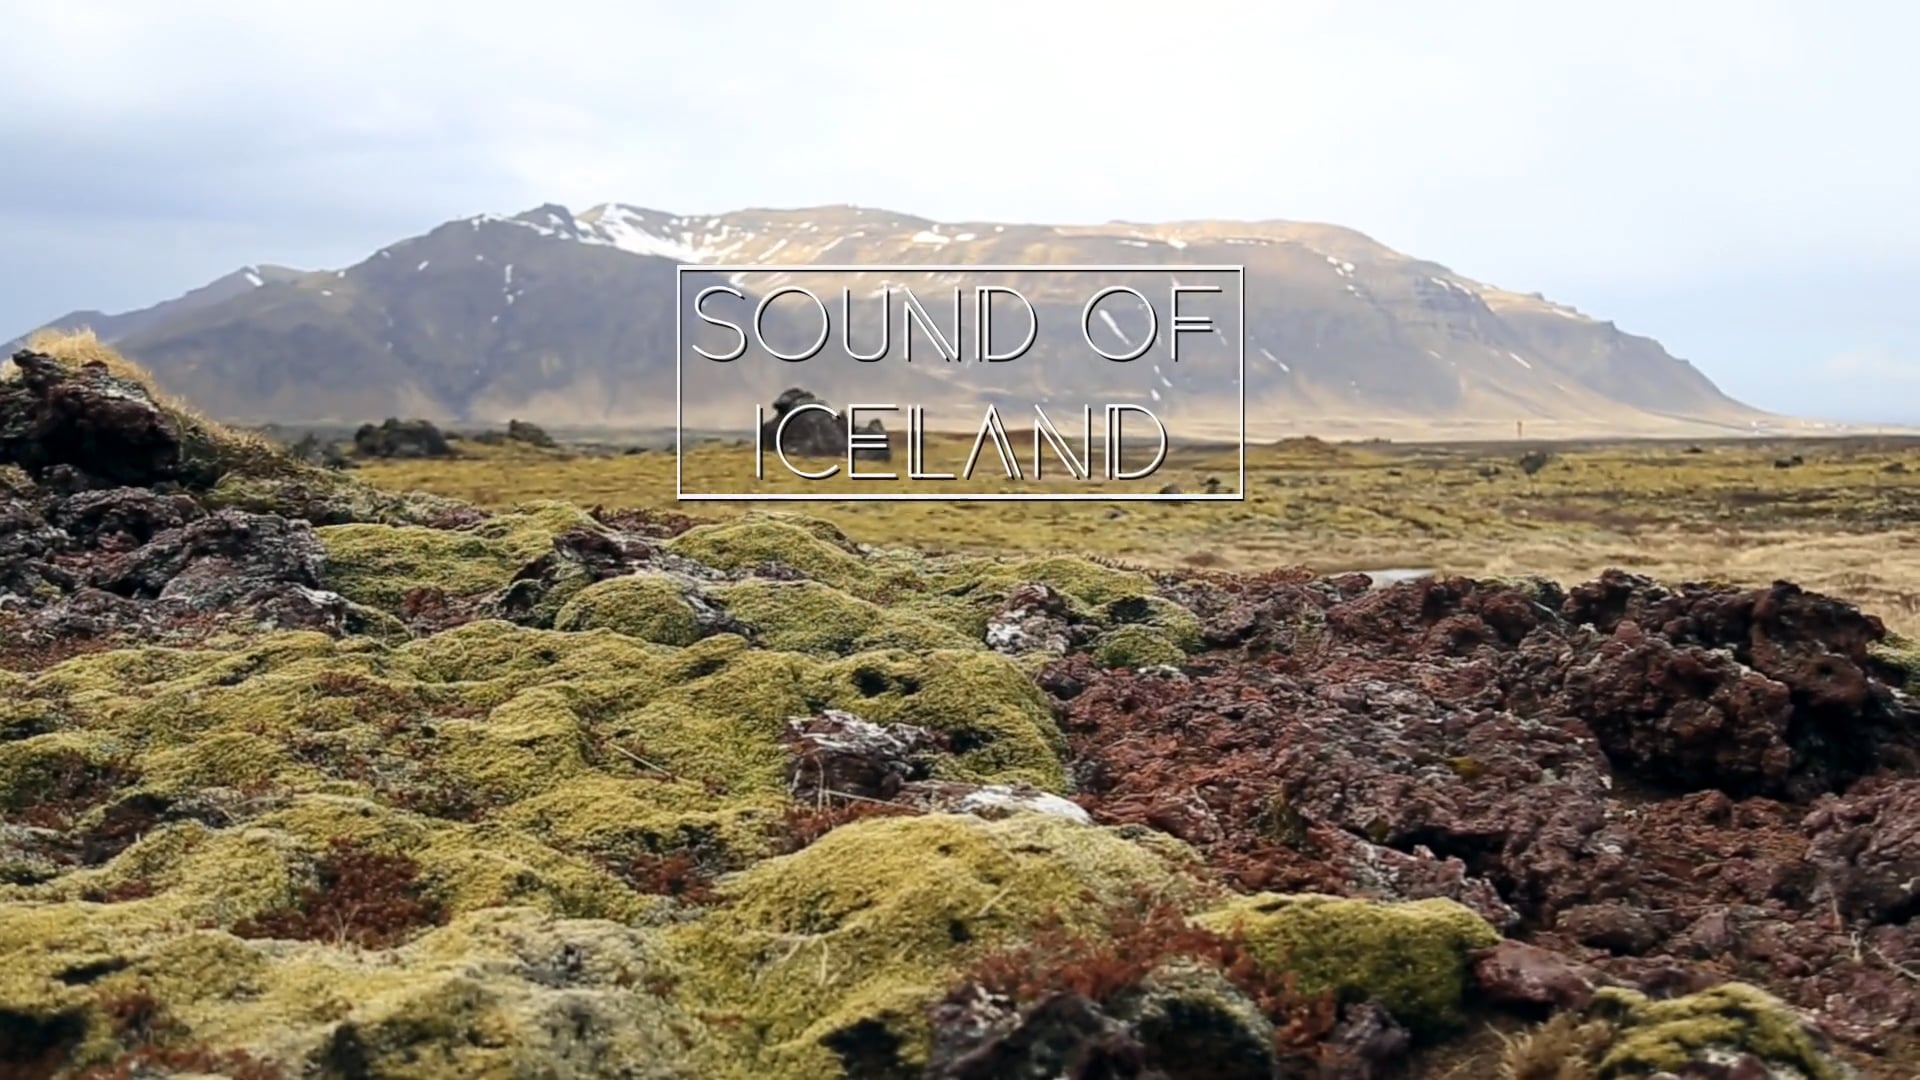 Sound of Iceland (HD 1080p)